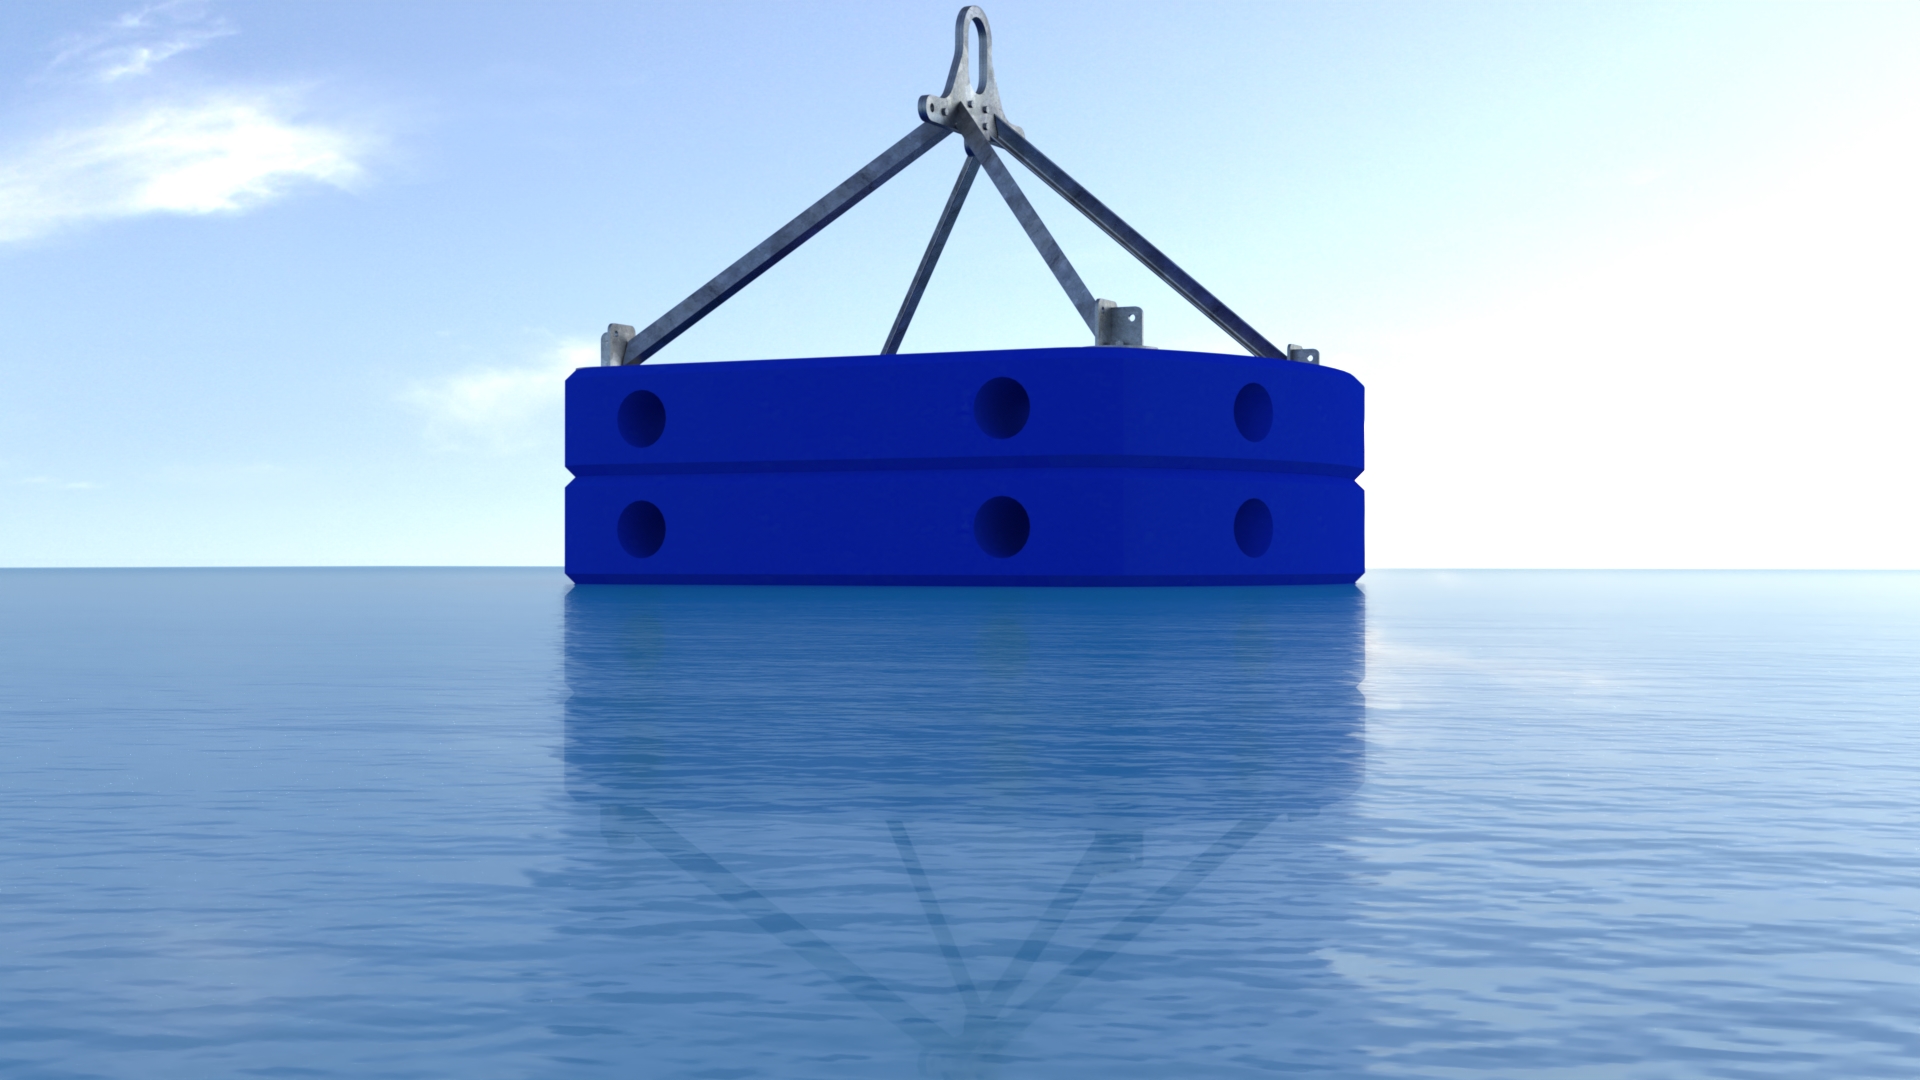 Modular Floatation System Concept 1 Side